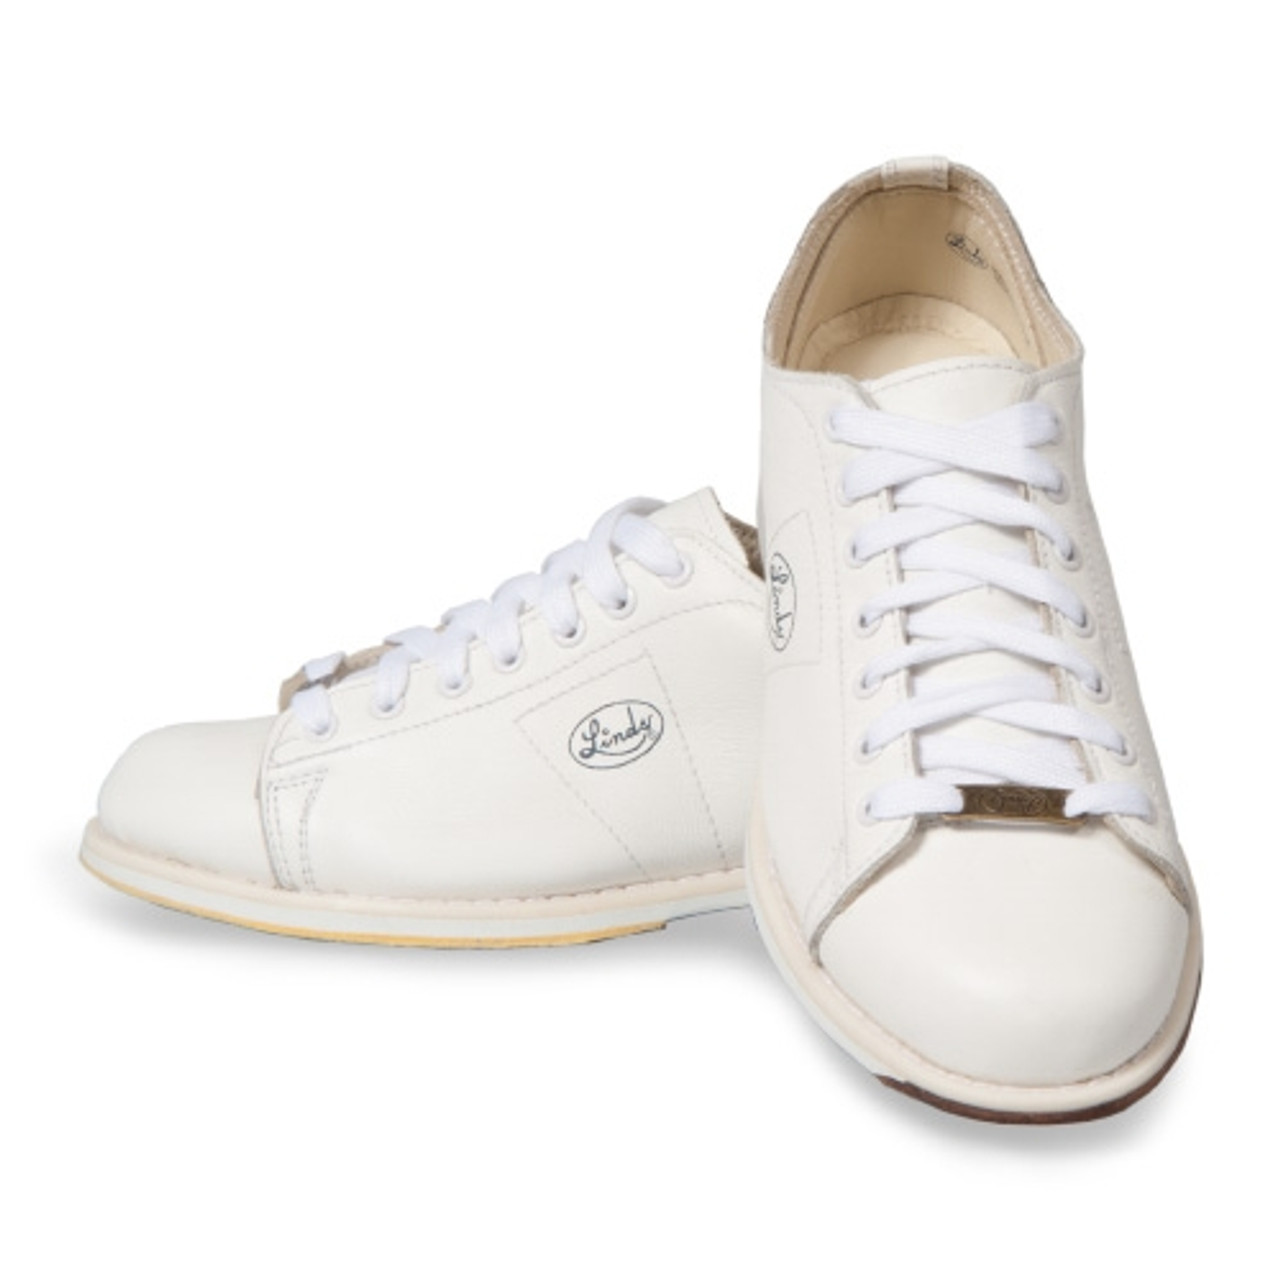 mens white bowling shoes